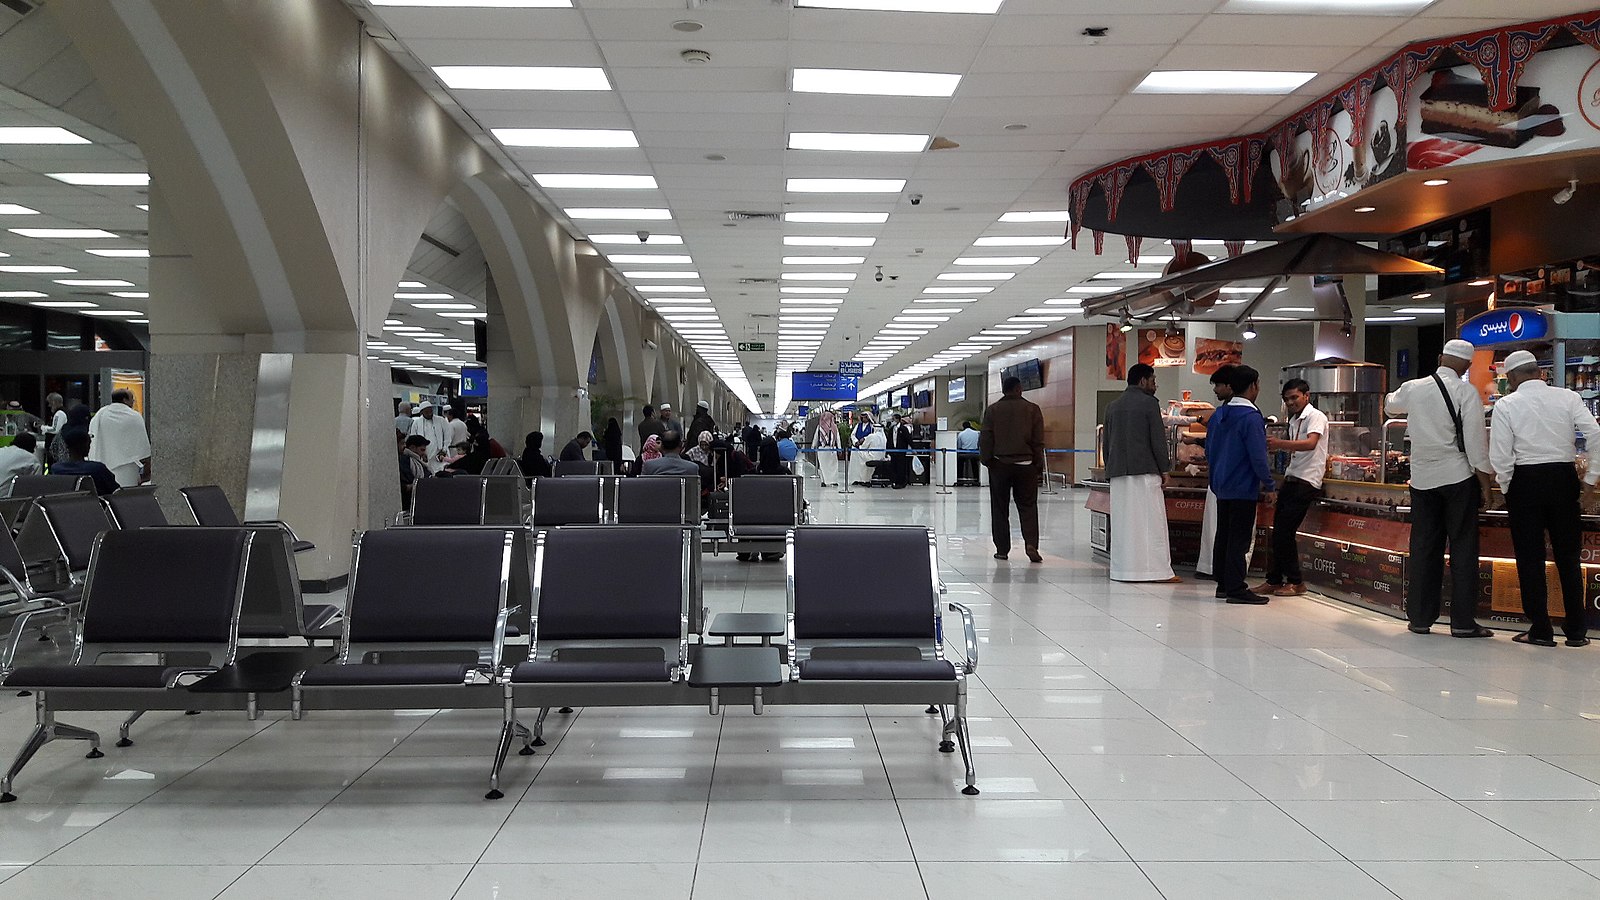 King Abdulaziz International Airport (JED) or KAIA, serves Jeddah in Saudi Arabia.